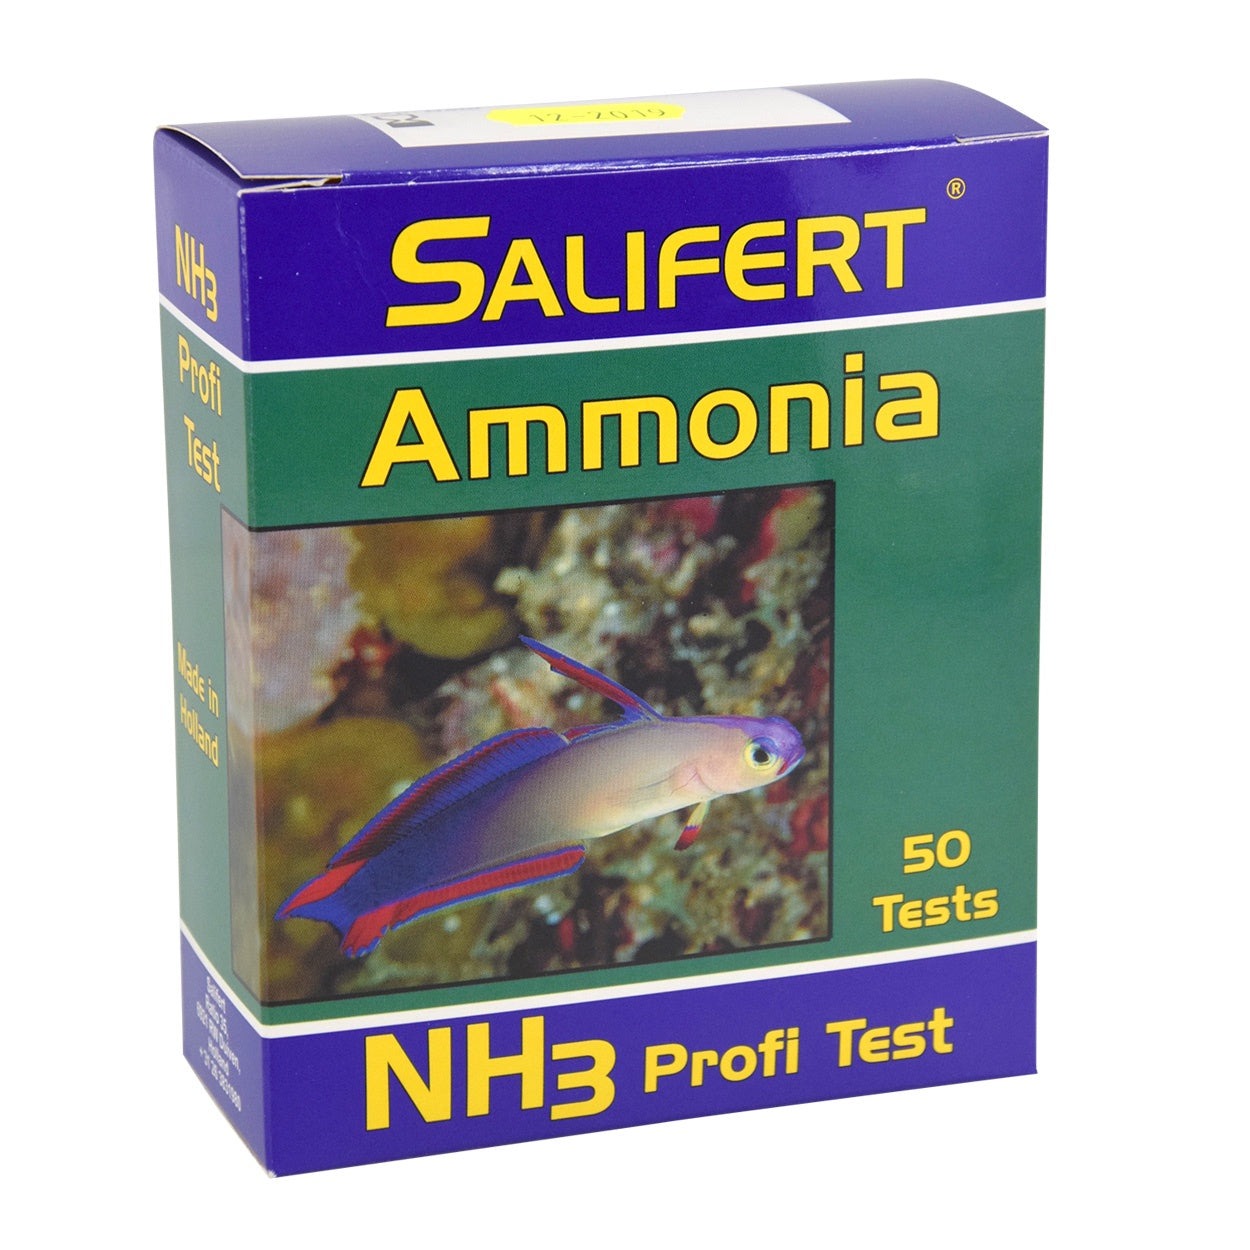 NH3 (Ammonia) Profi-Test